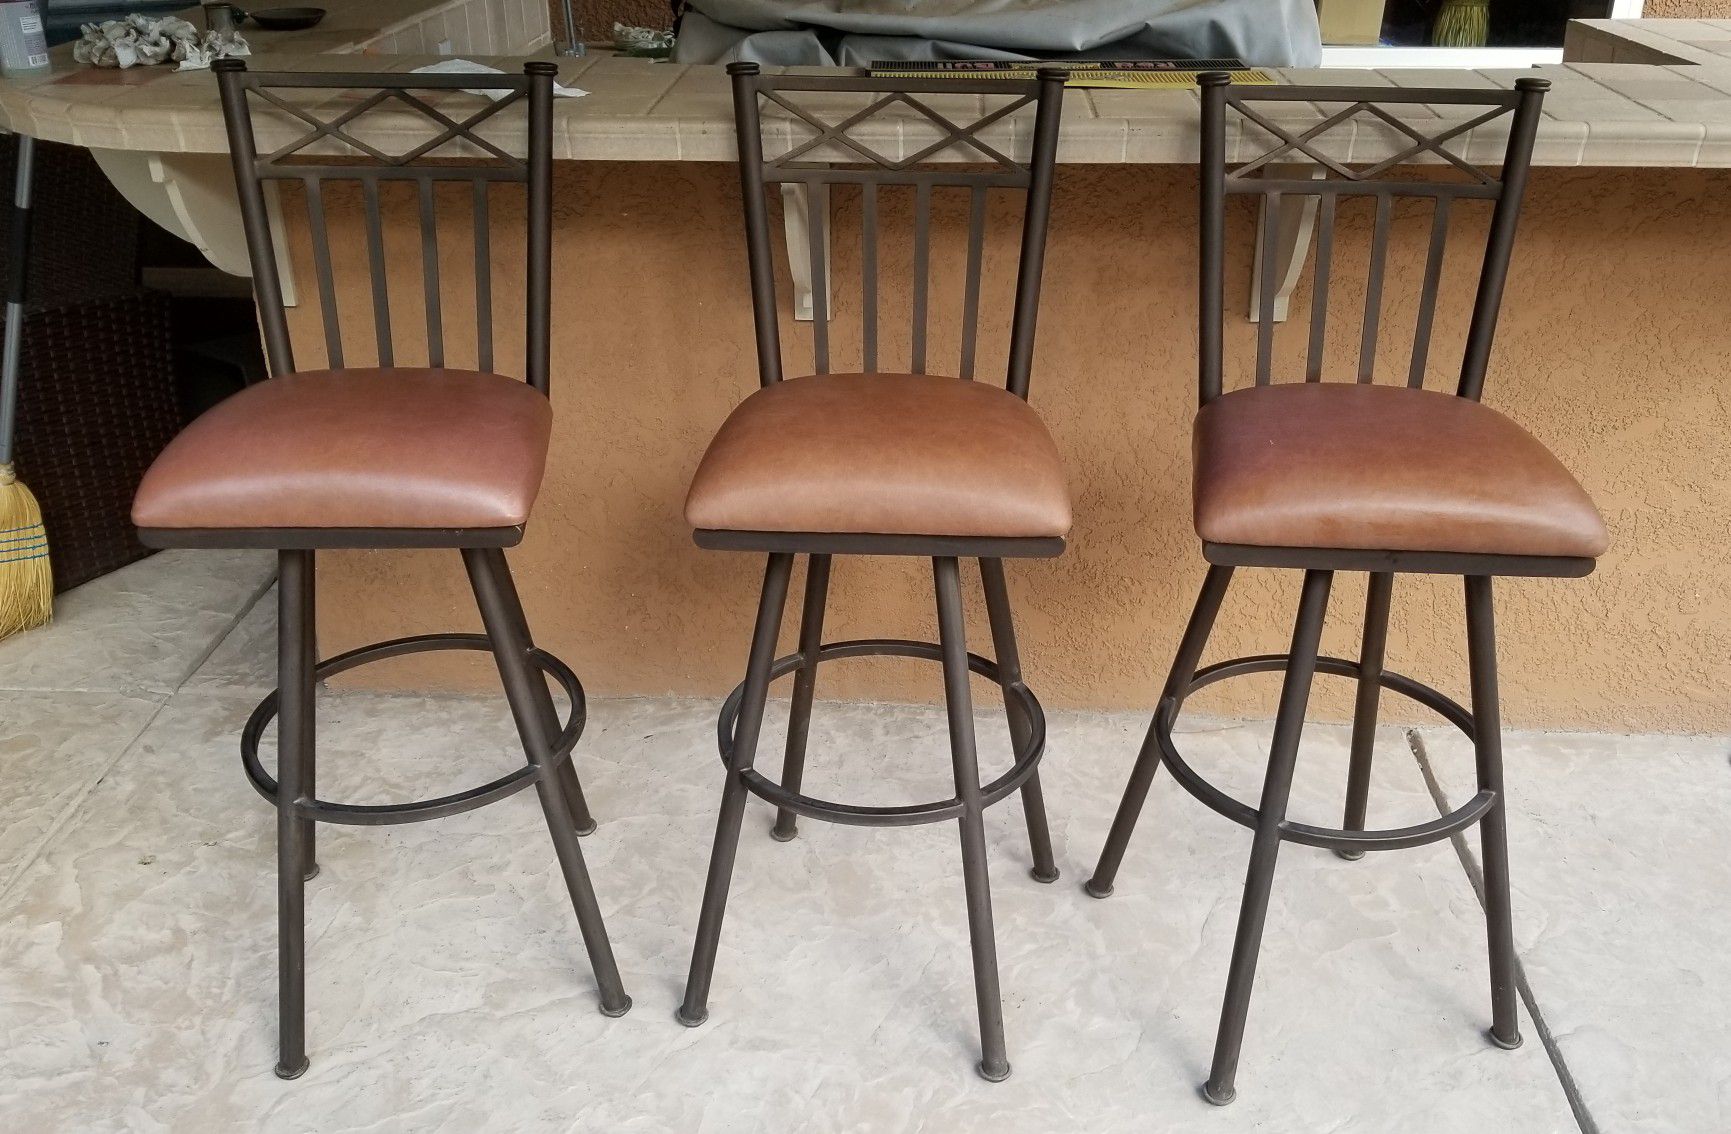 3 metal frame swivel stools $40 each!!!